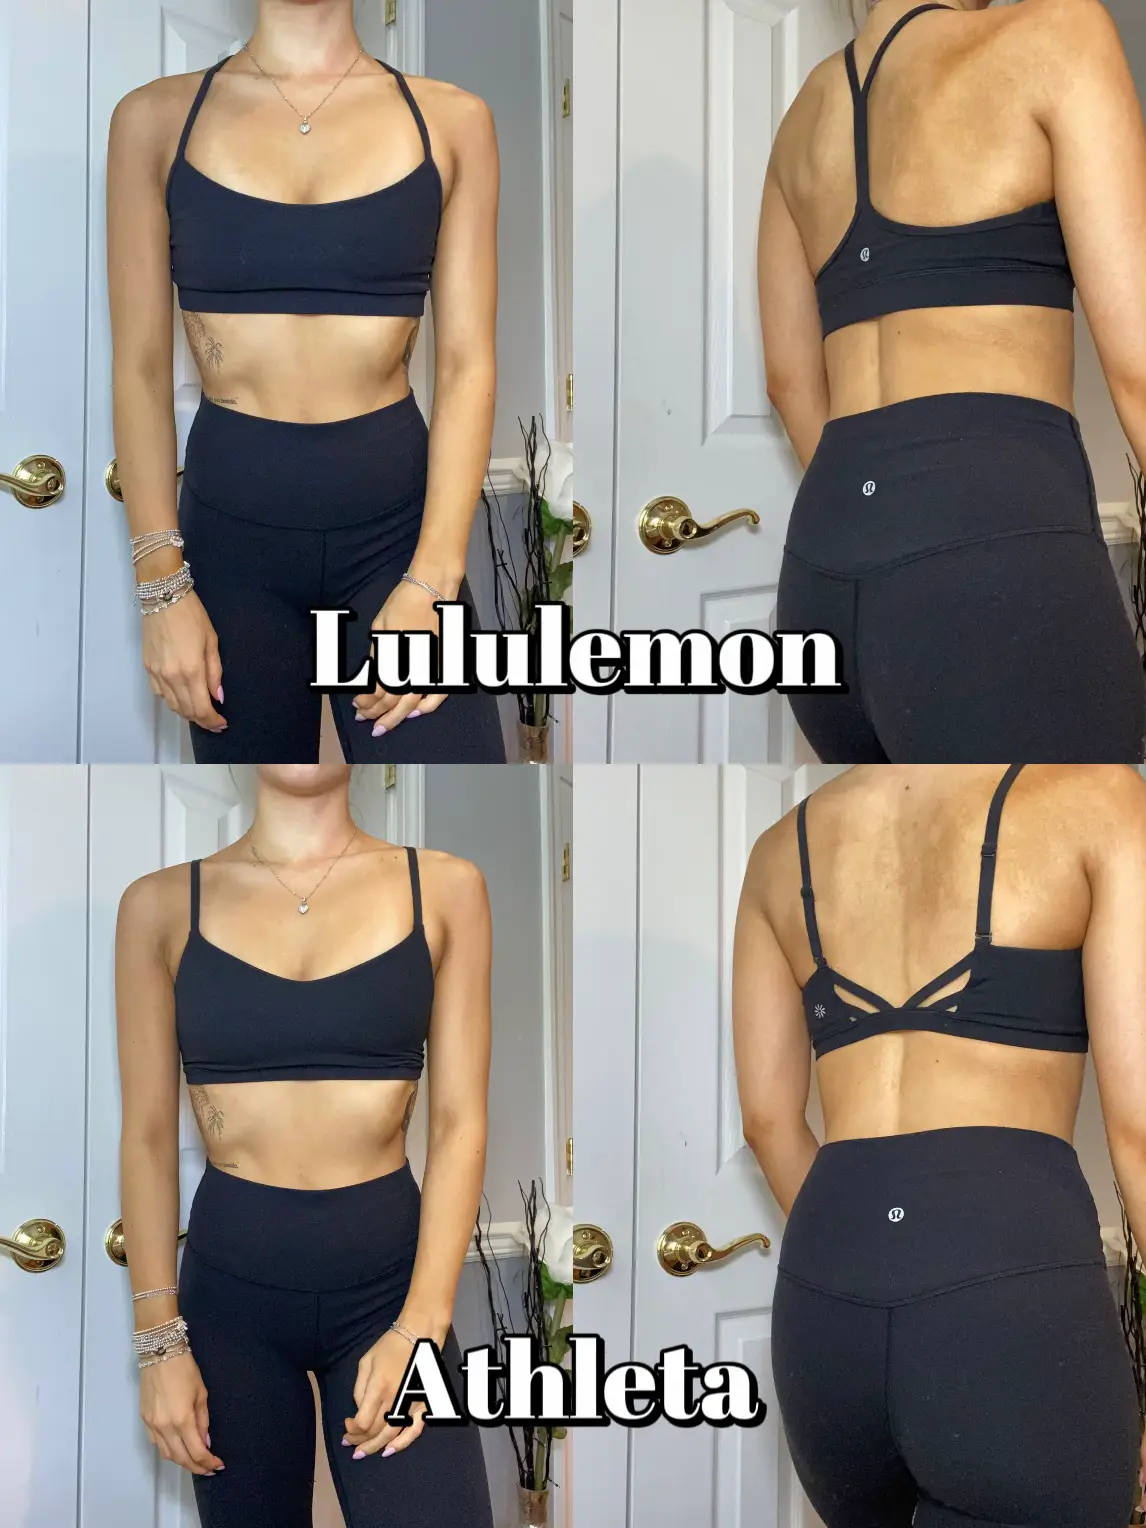 lululemon velvet dust color comparison 💕 #lululemon